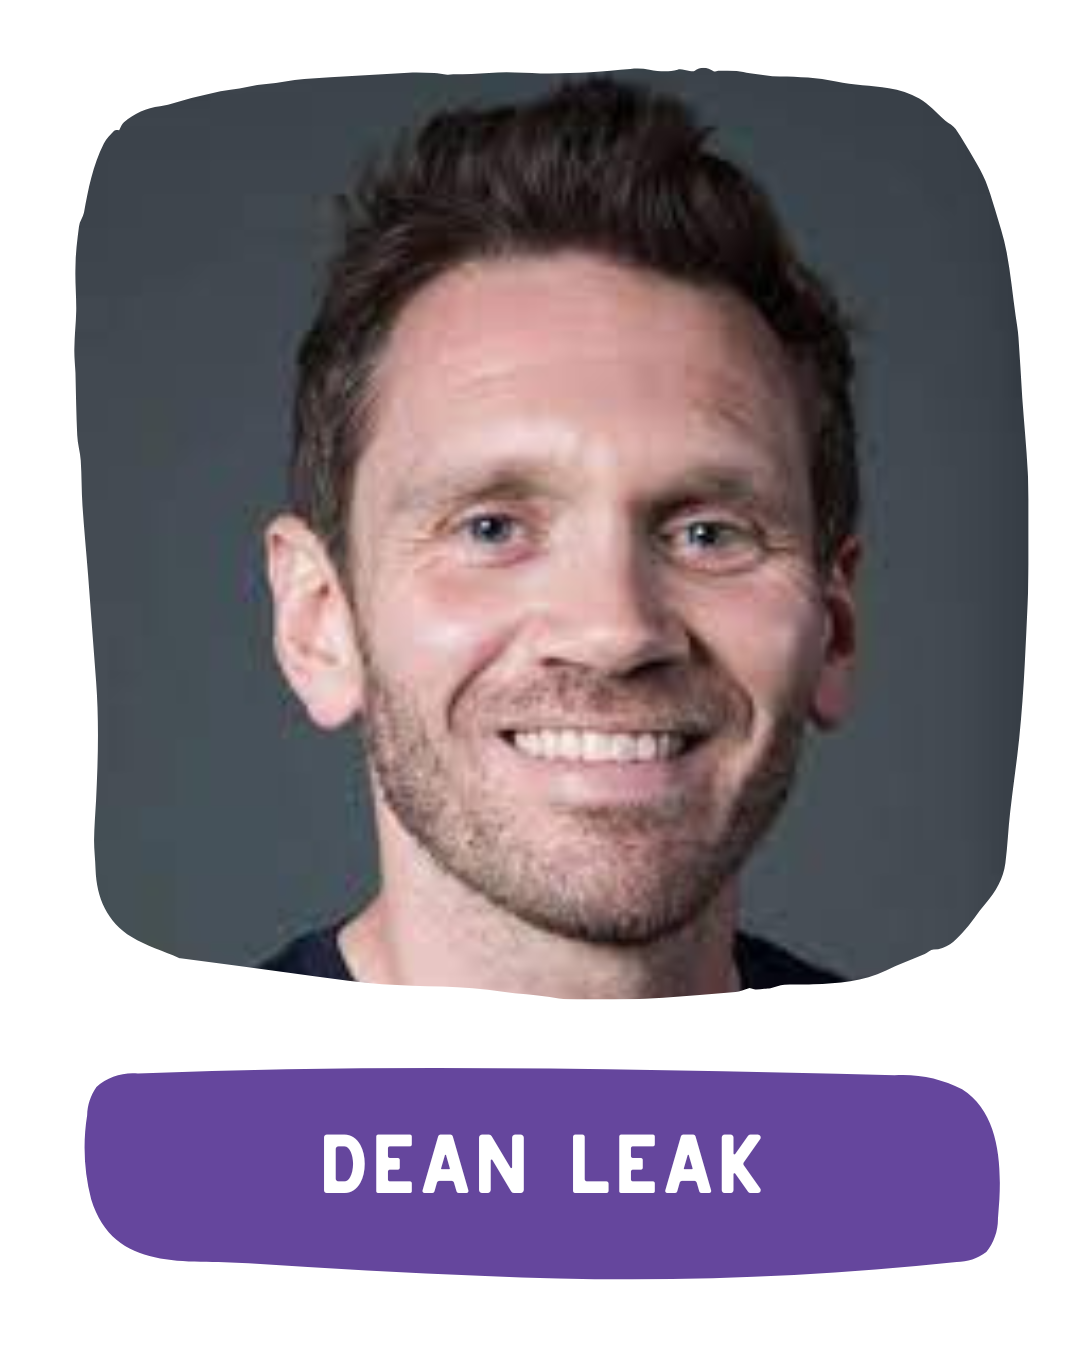 Dean Leak